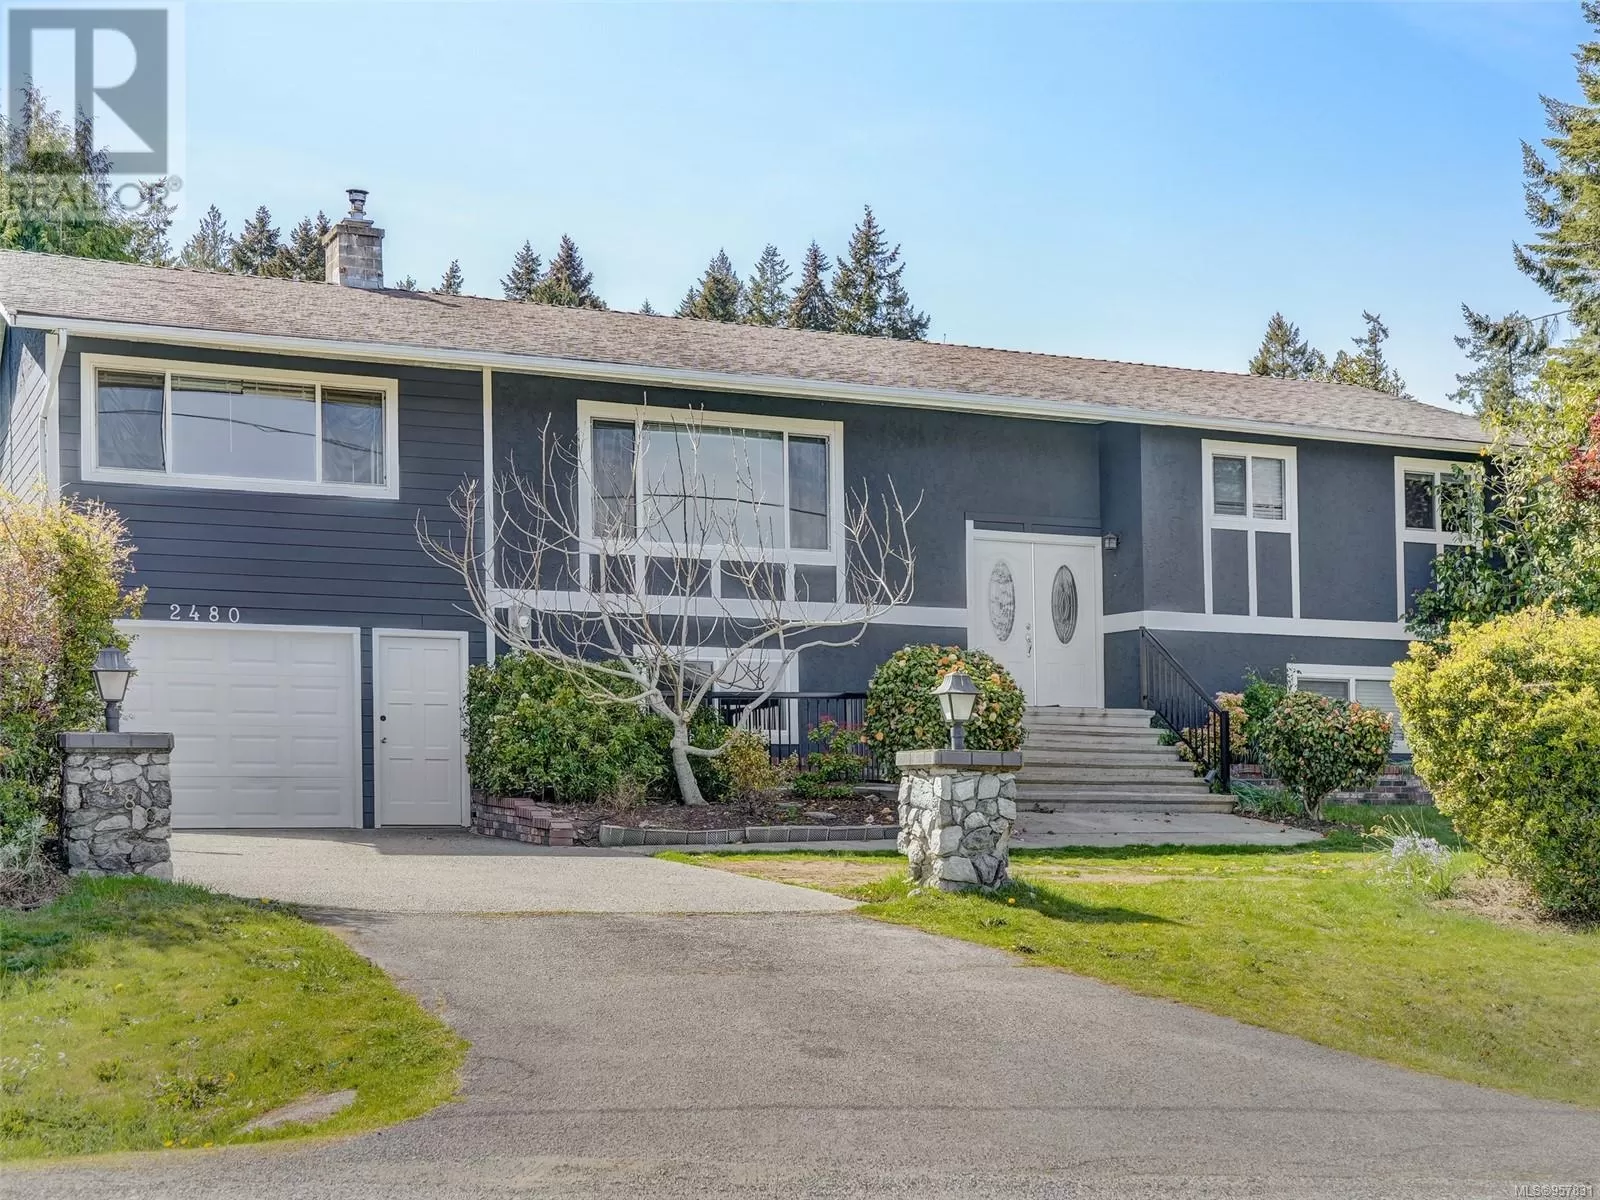 House for rent: 2480 Bidston Rd, Mill Bay, British Columbia V8H 1C3